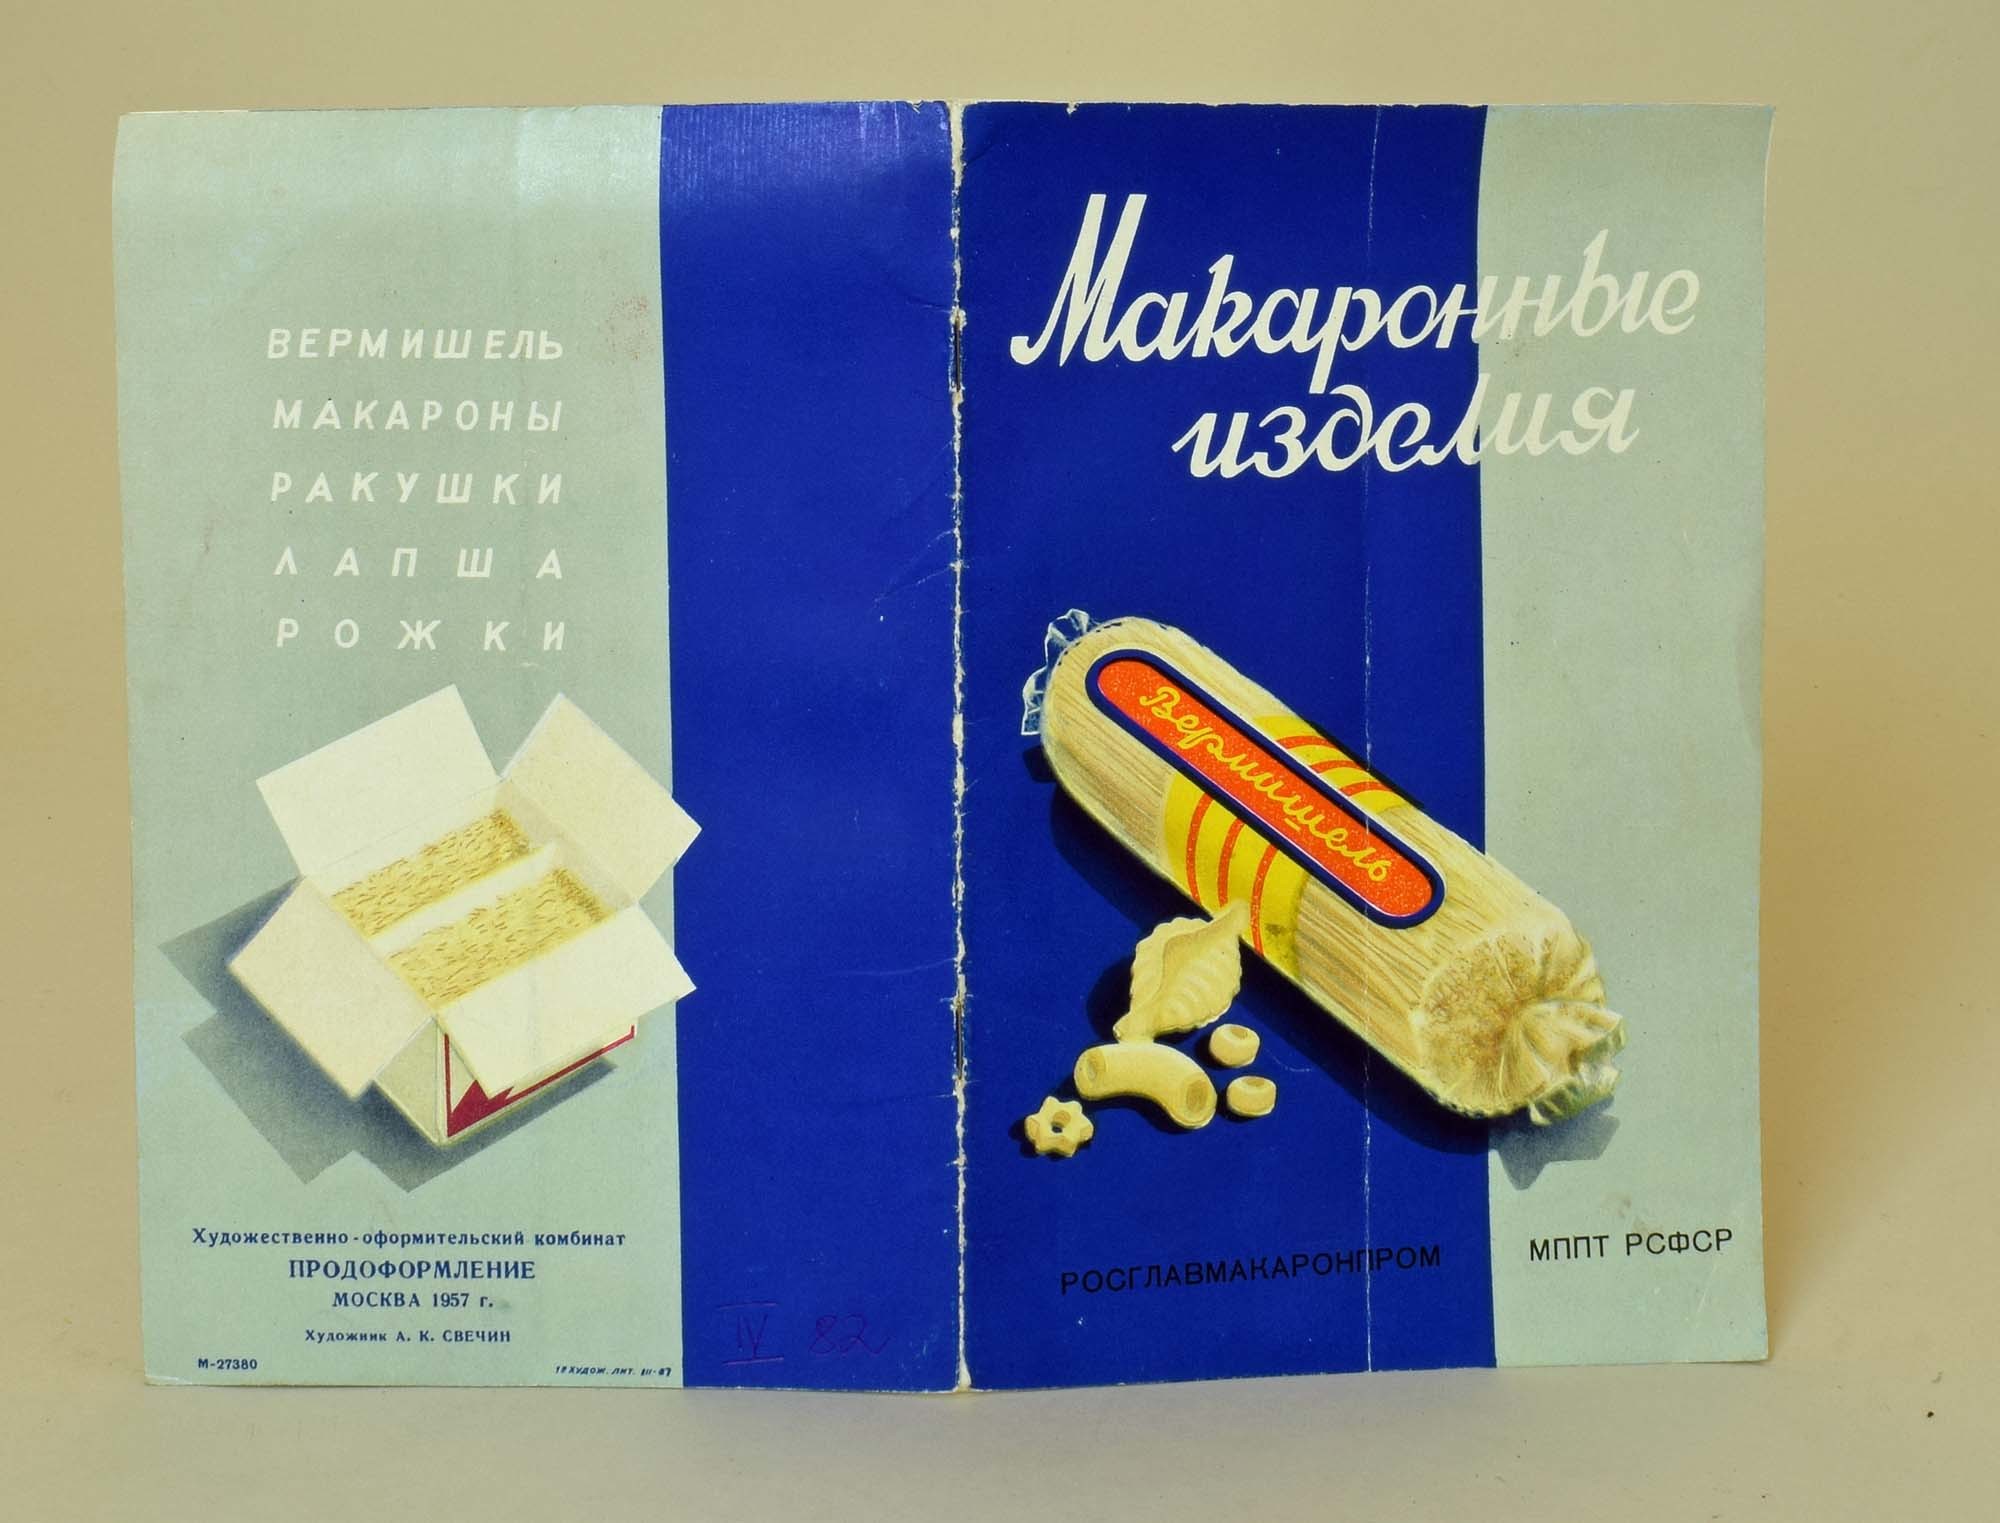 Produktinformation der sowjetischen Makkaroni-Industrie (Heimatmuseum Dohna CC BY-NC-SA)